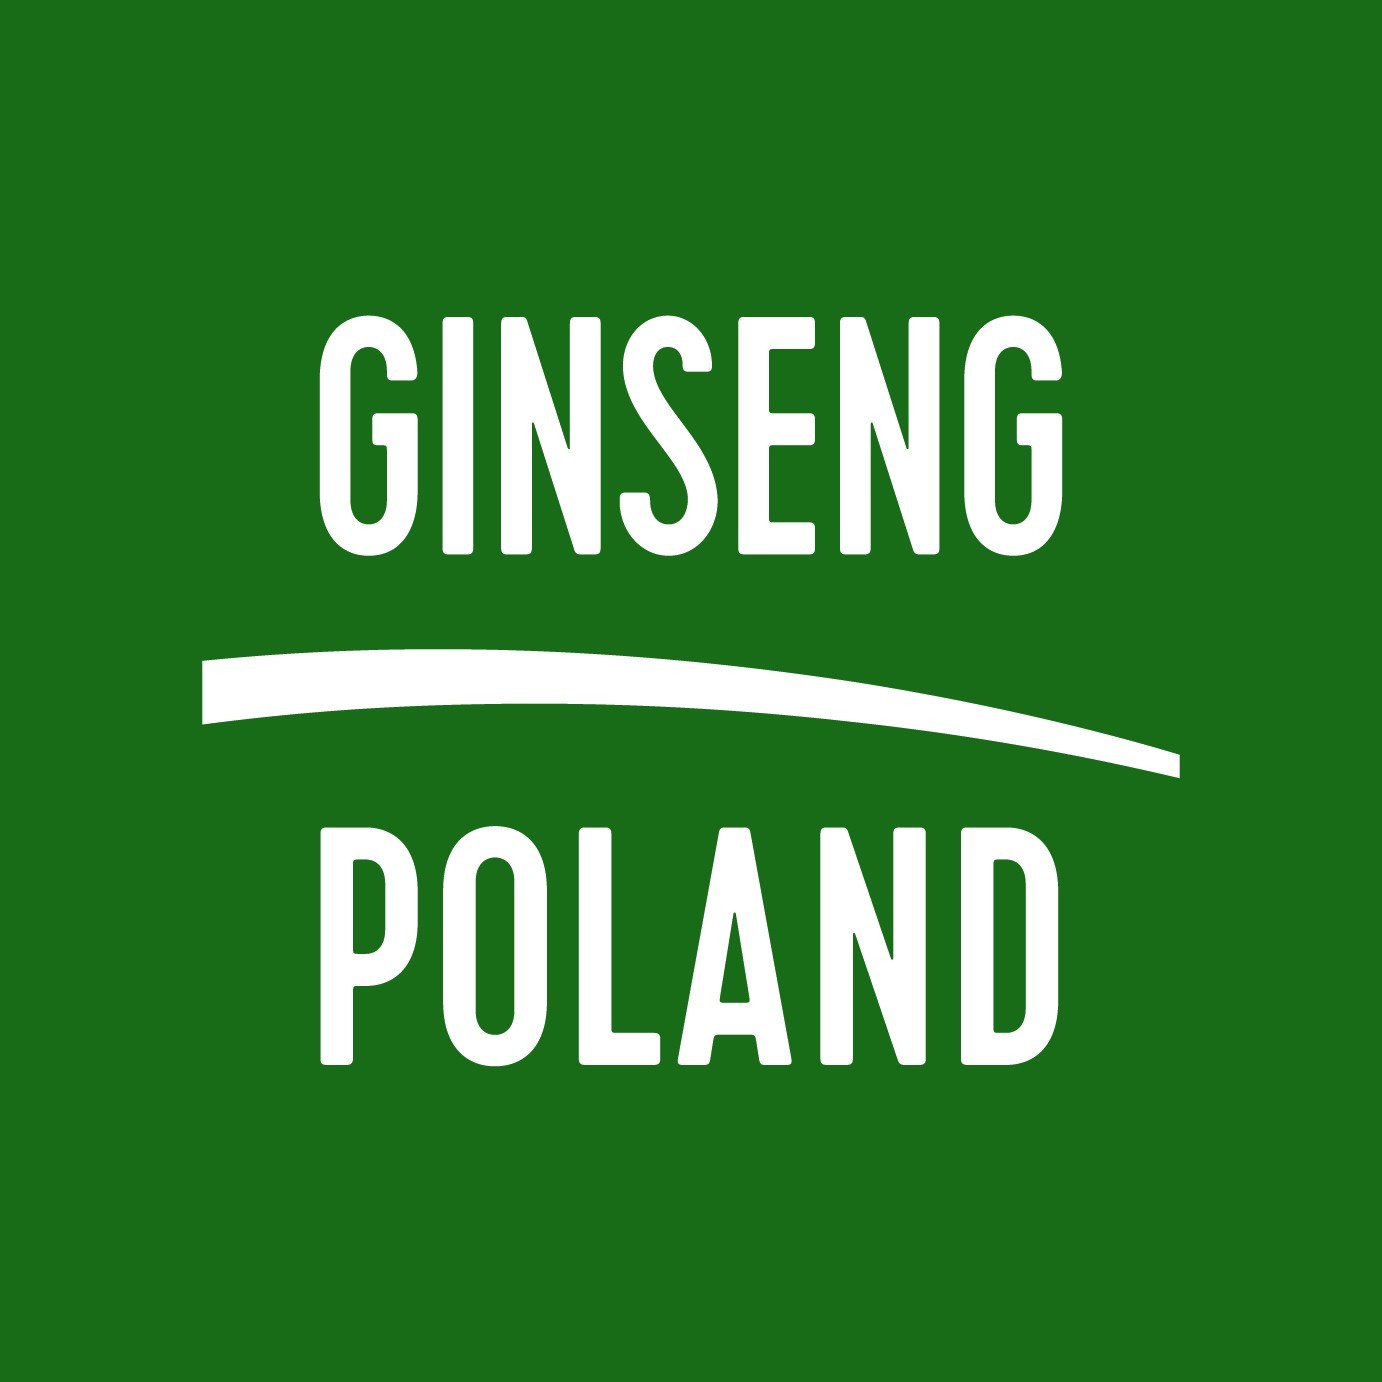 Ginseng Poland